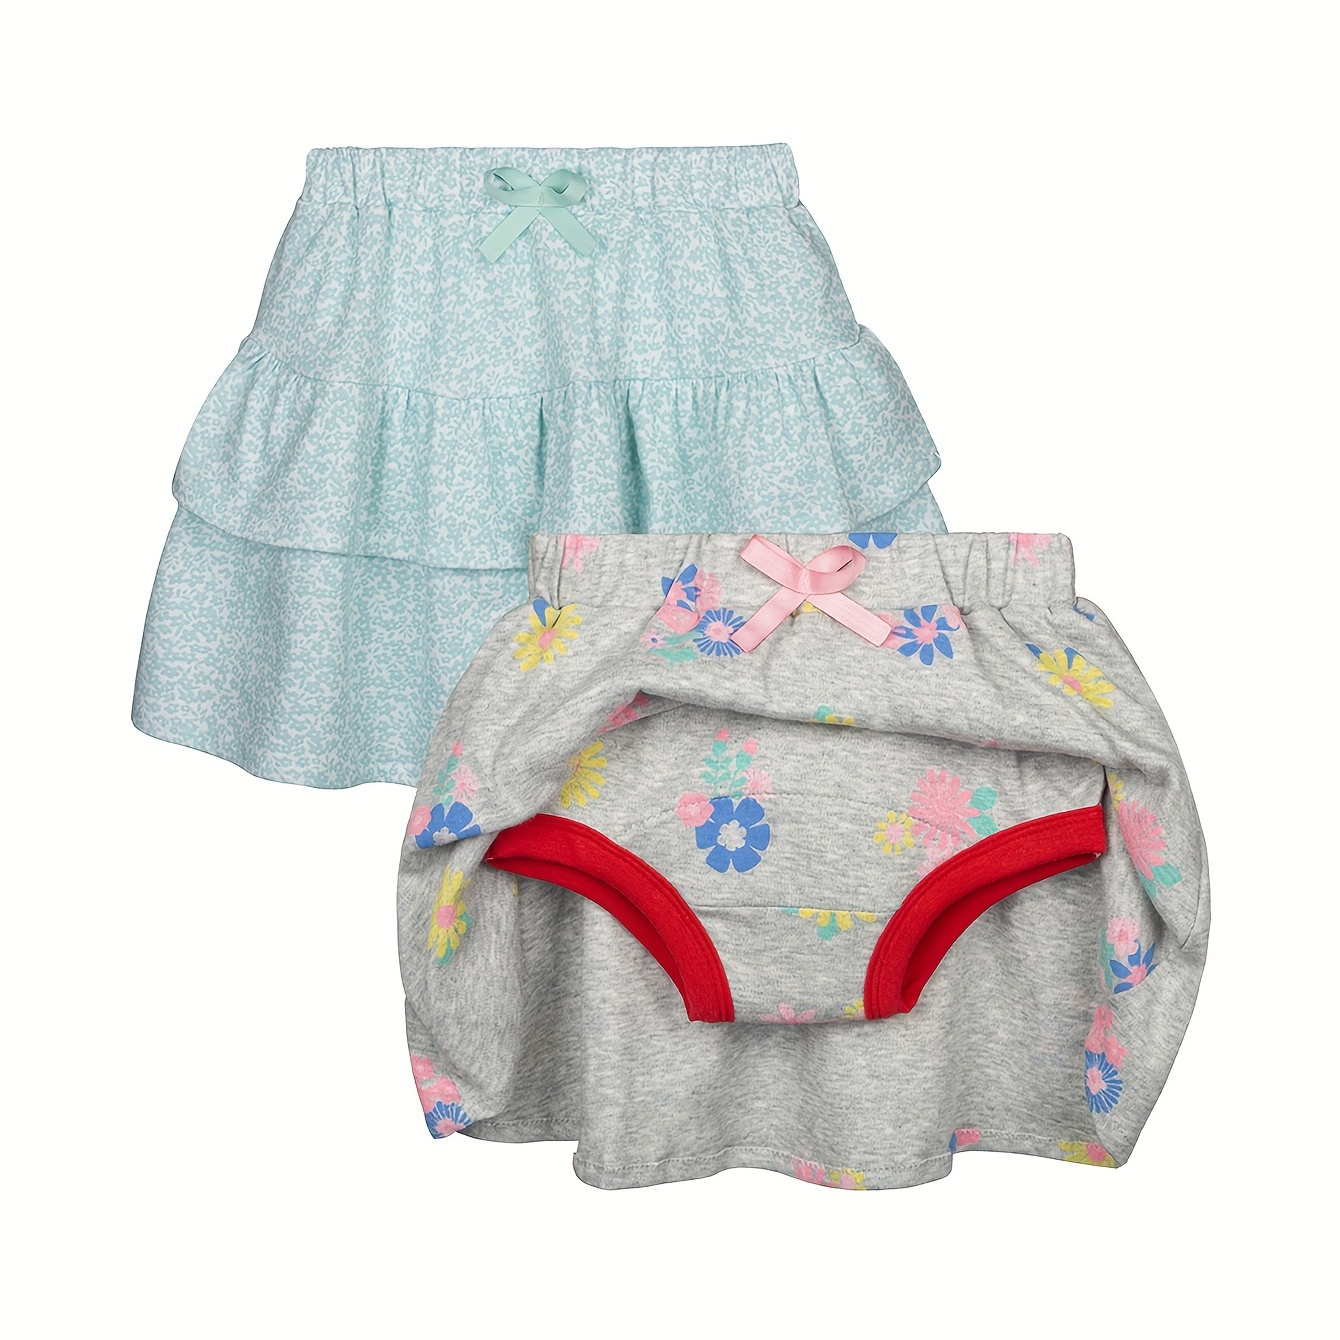 

2 Pcs 100% Cotton Toddler Girls Potty Training Pants, Ruffle Diaper Skirt Shorts Soft Absorbent